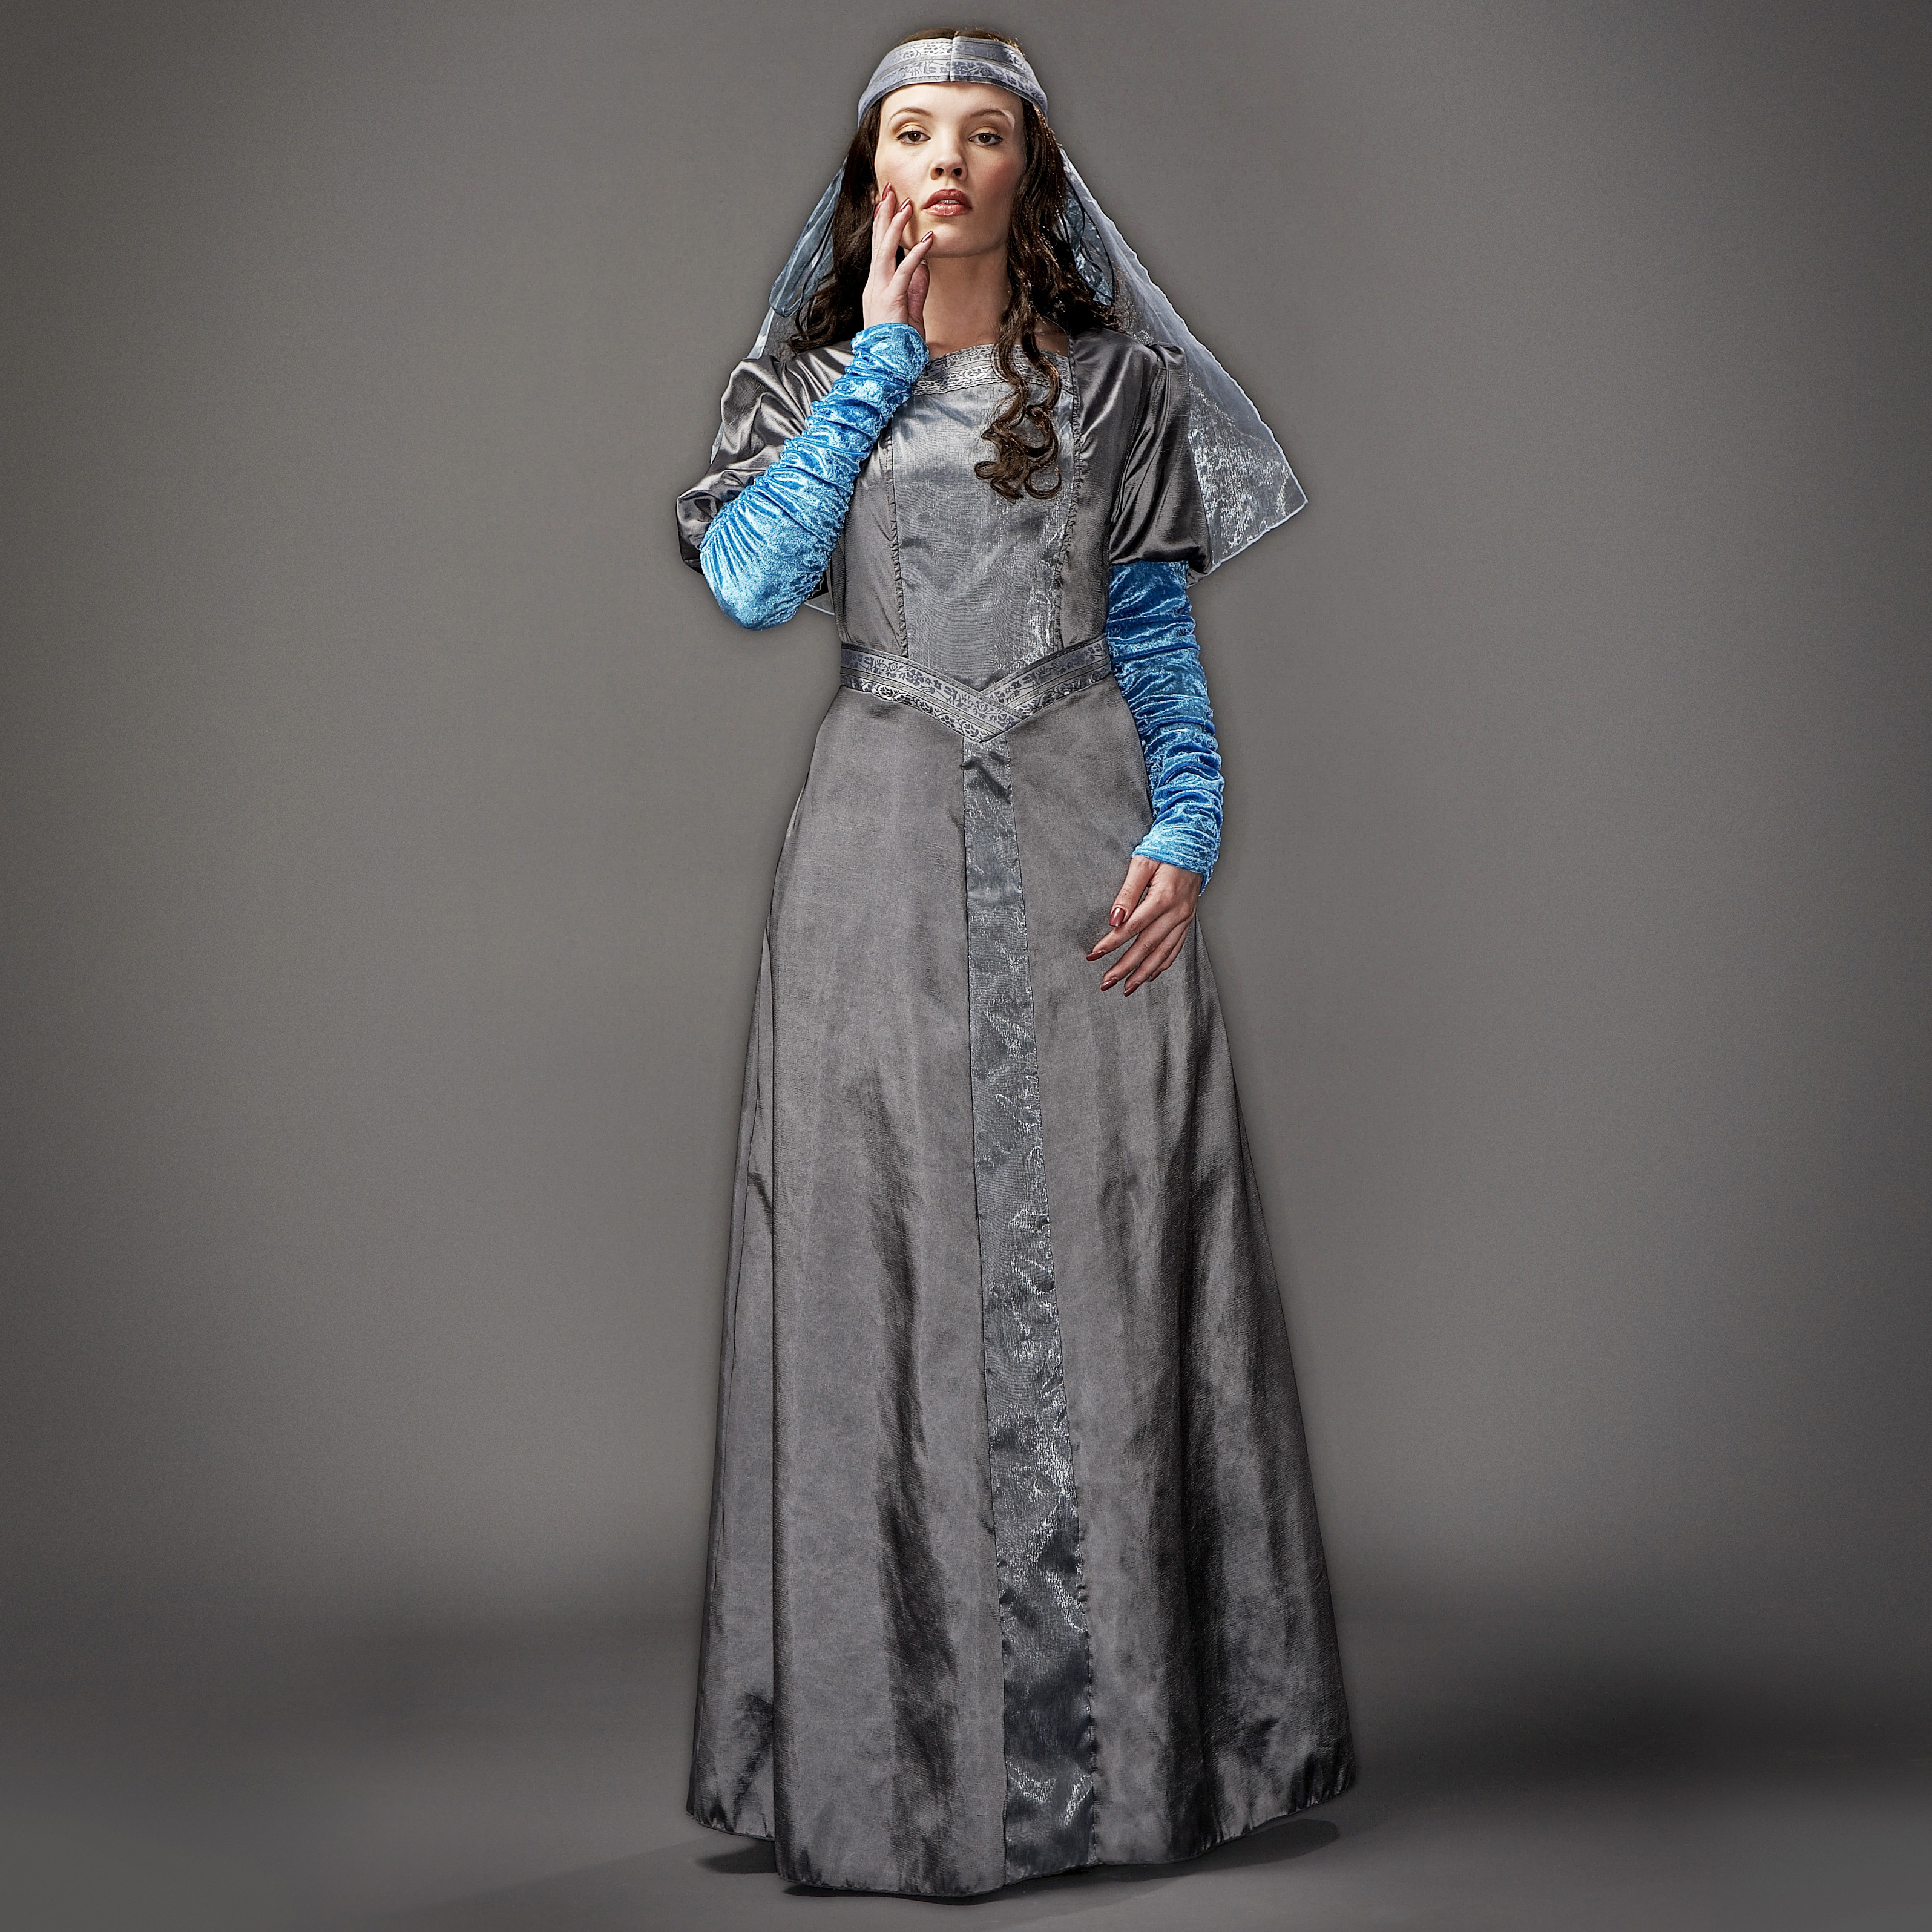 AMC Women's Reyna Isabella Adult Costume - One-Size (8-14)